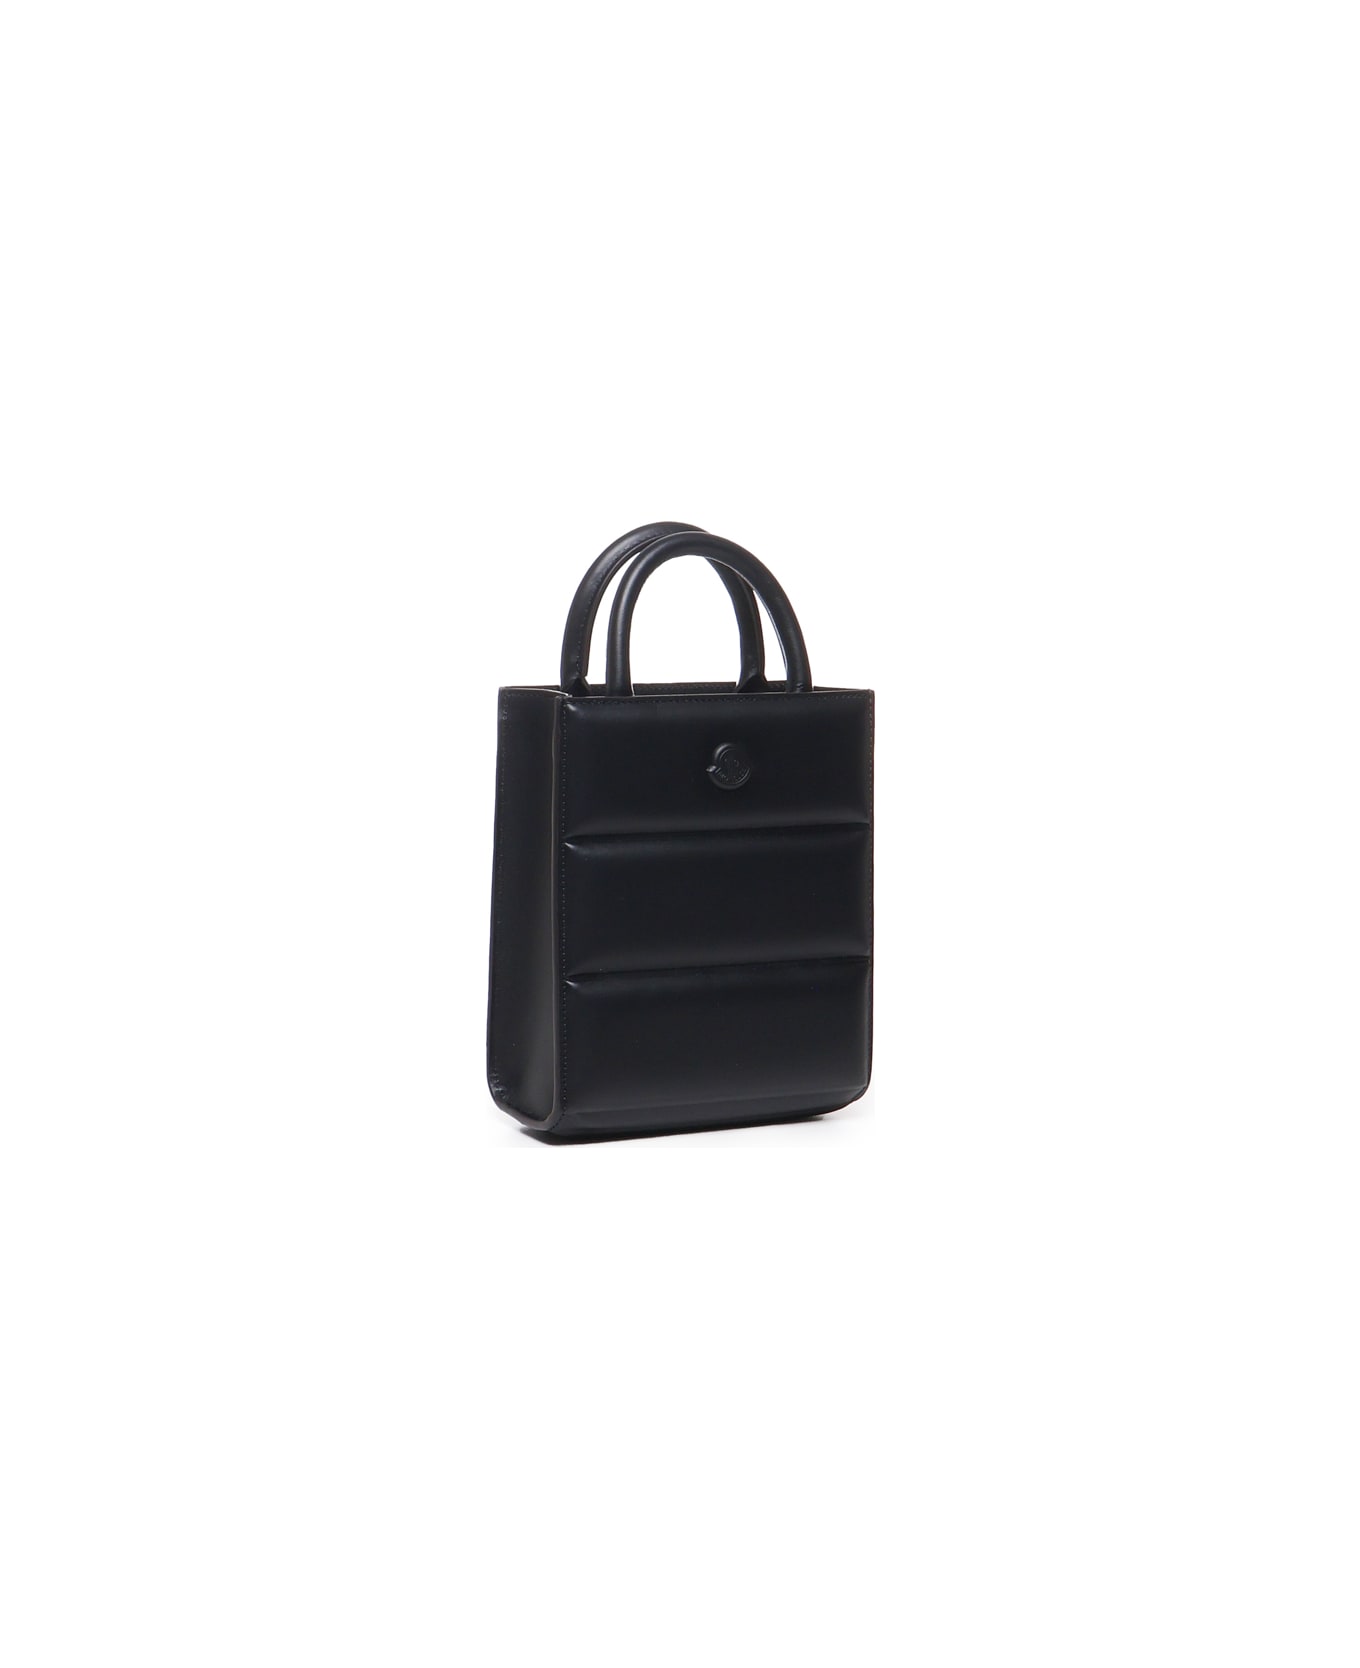 Moncler Leather Doudoune Mini Tote Bag - Black